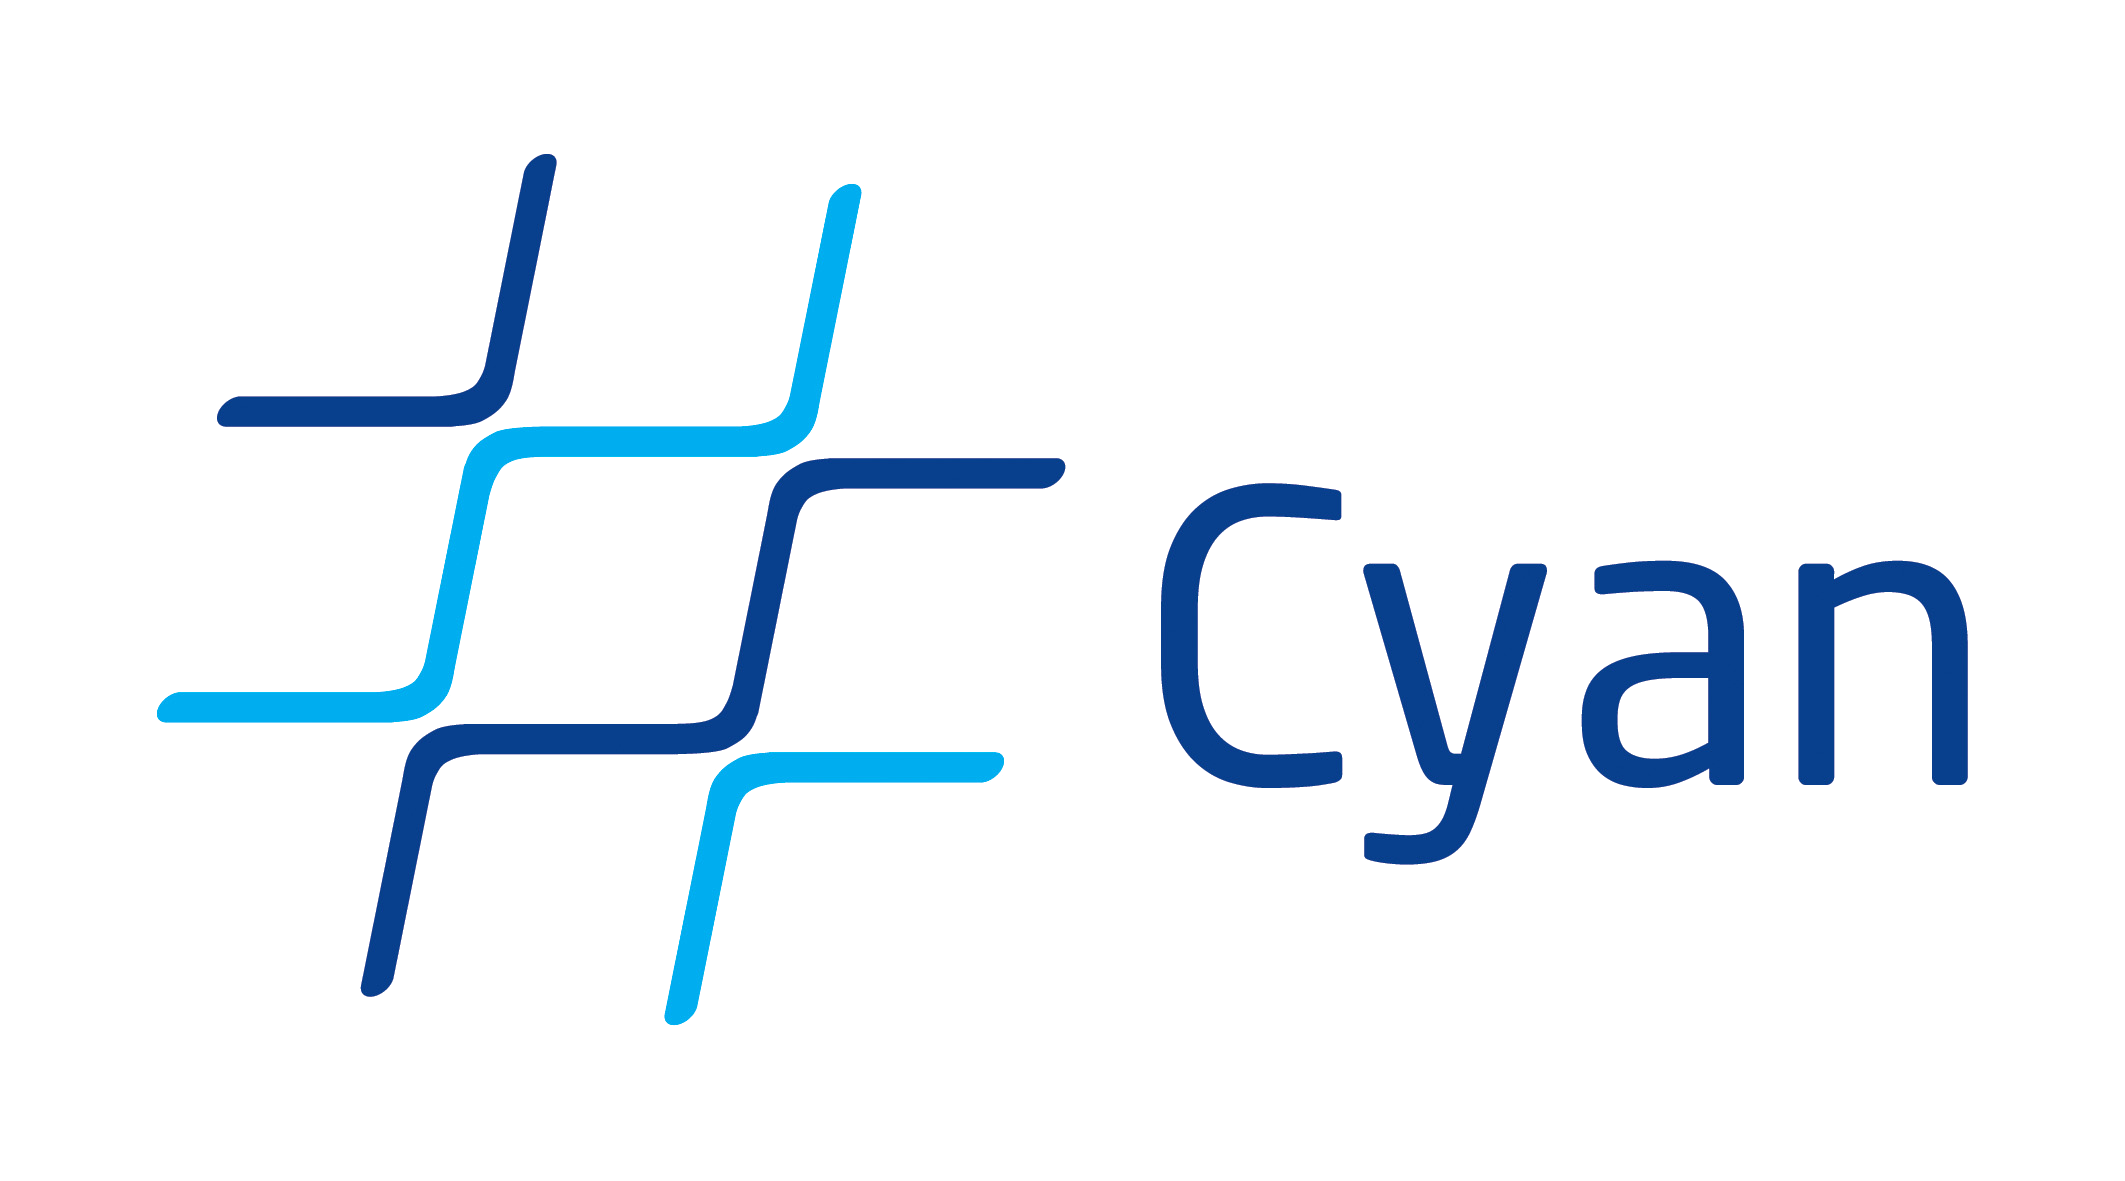 The Cyan Language